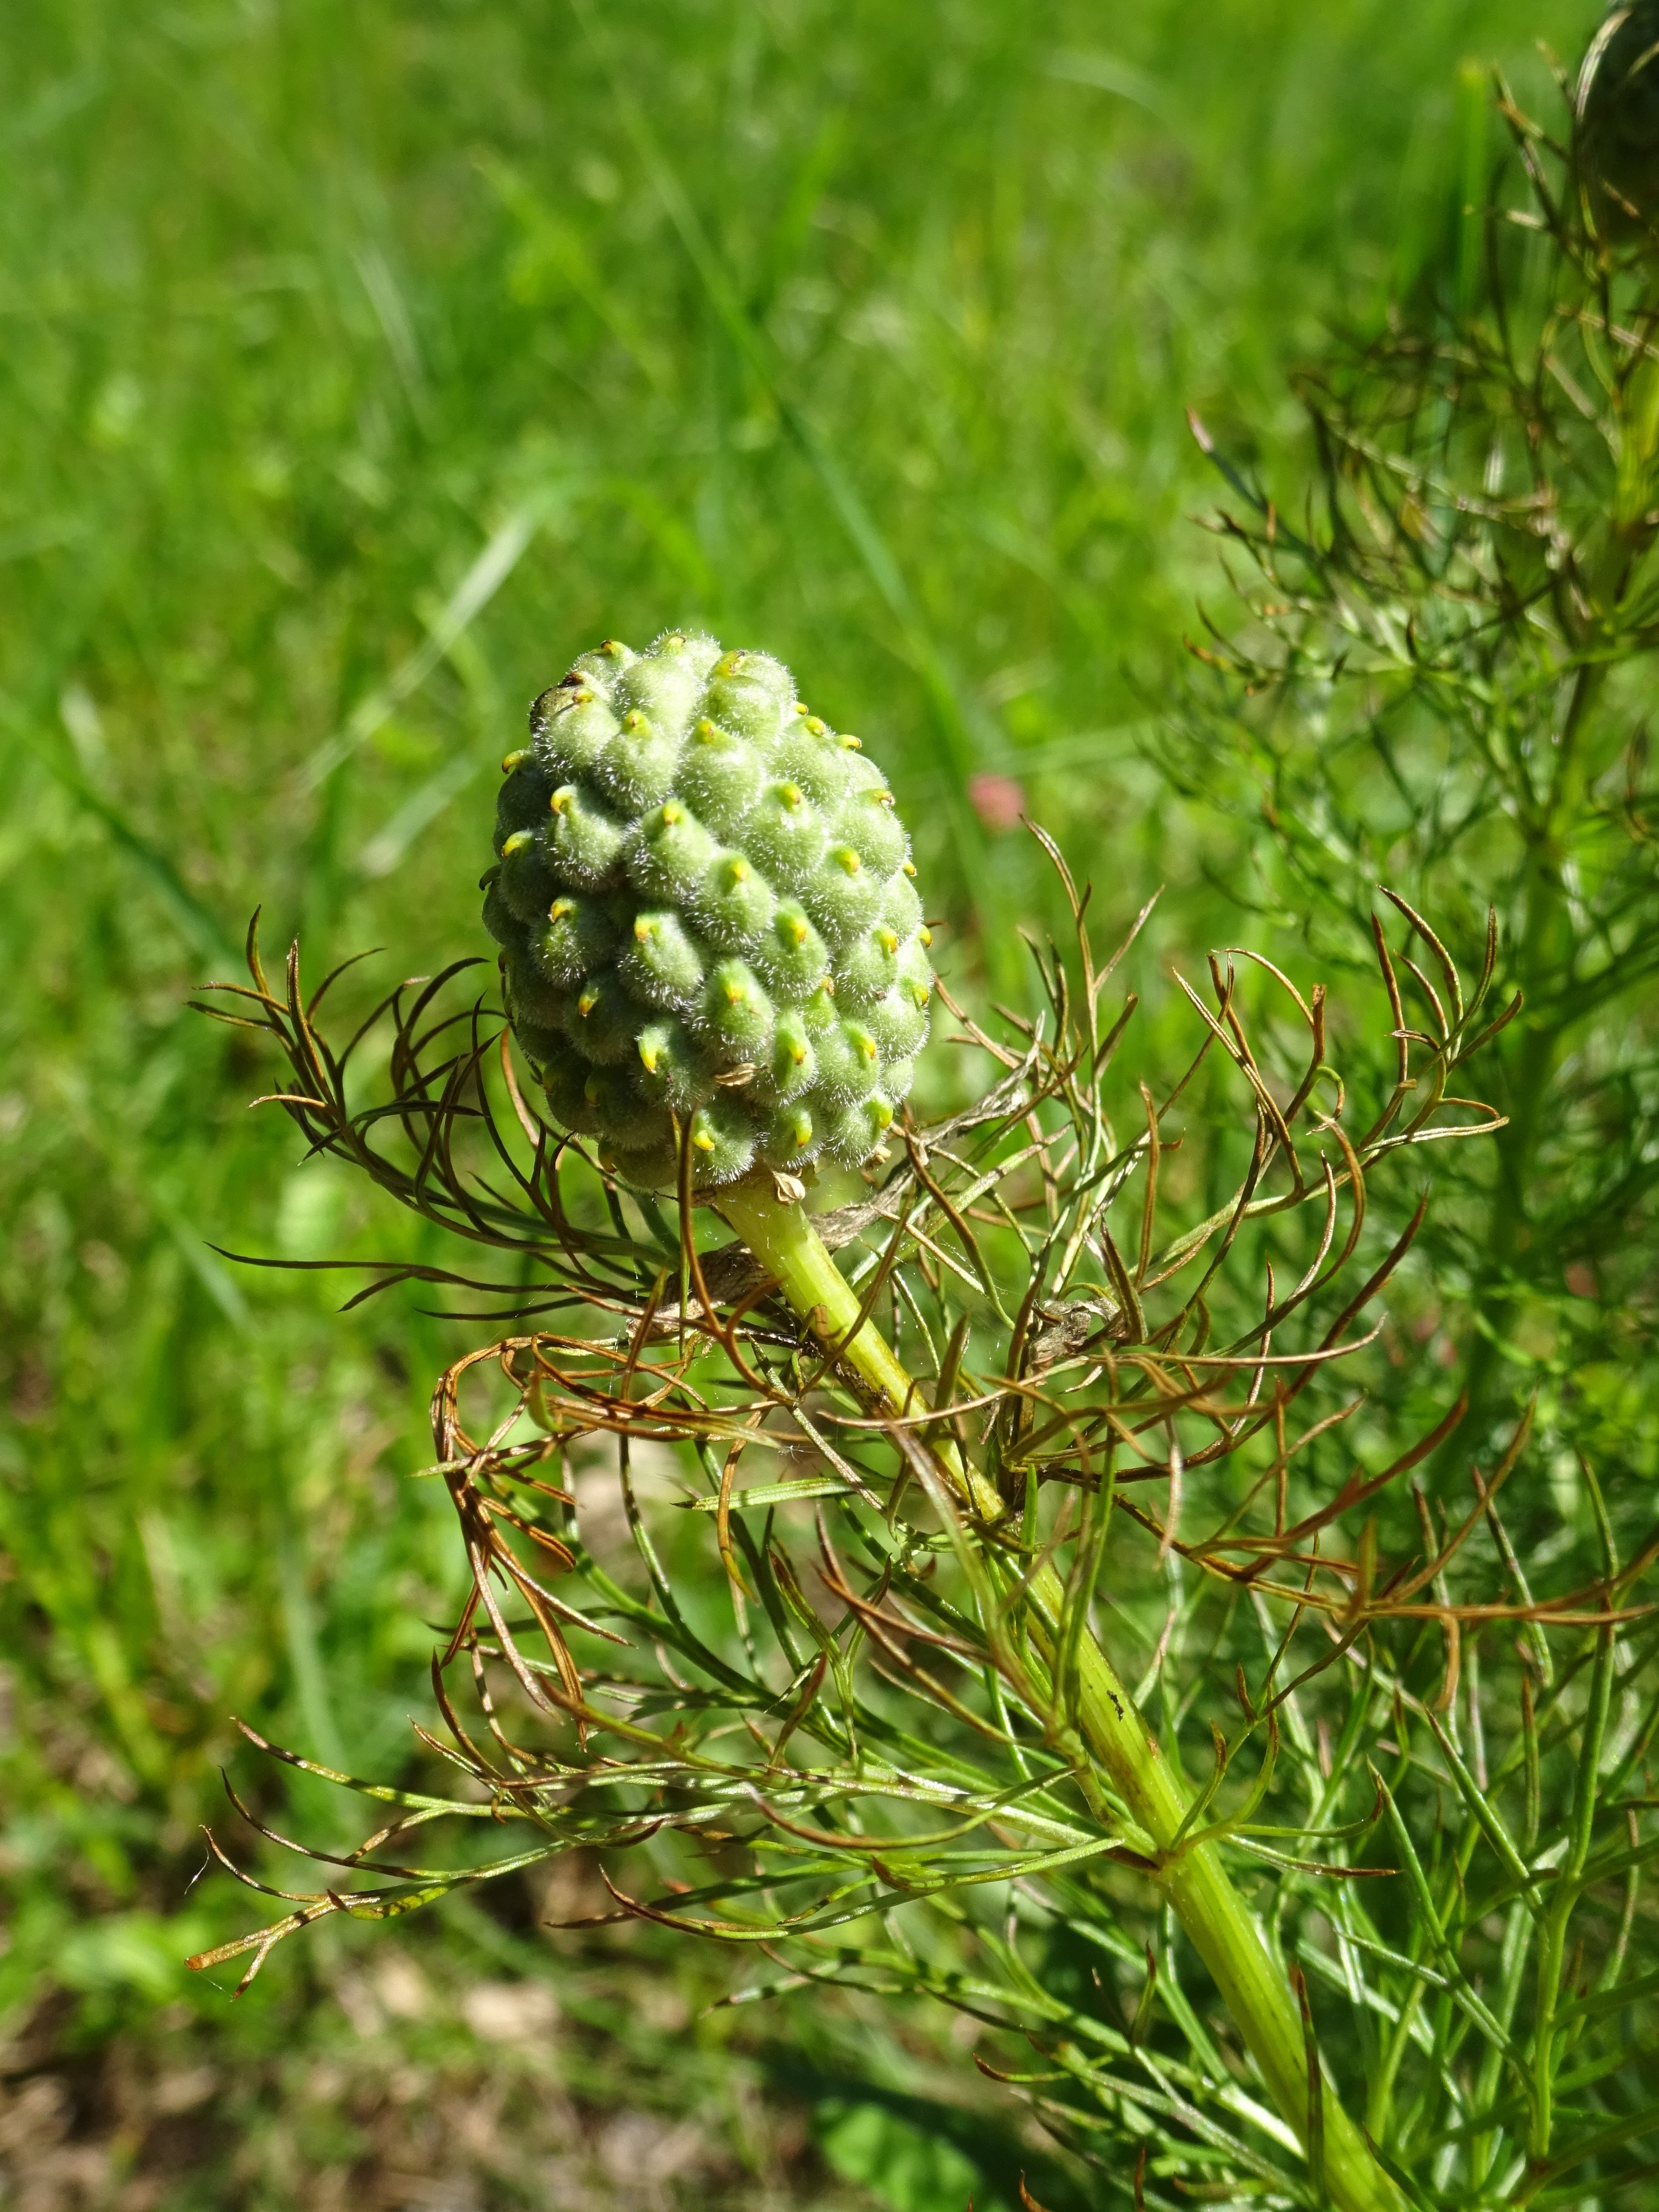 Tavaszi hérics - Adonia vernalis termése (Rippl-Rónai Múzeum CC BY-NC-ND)